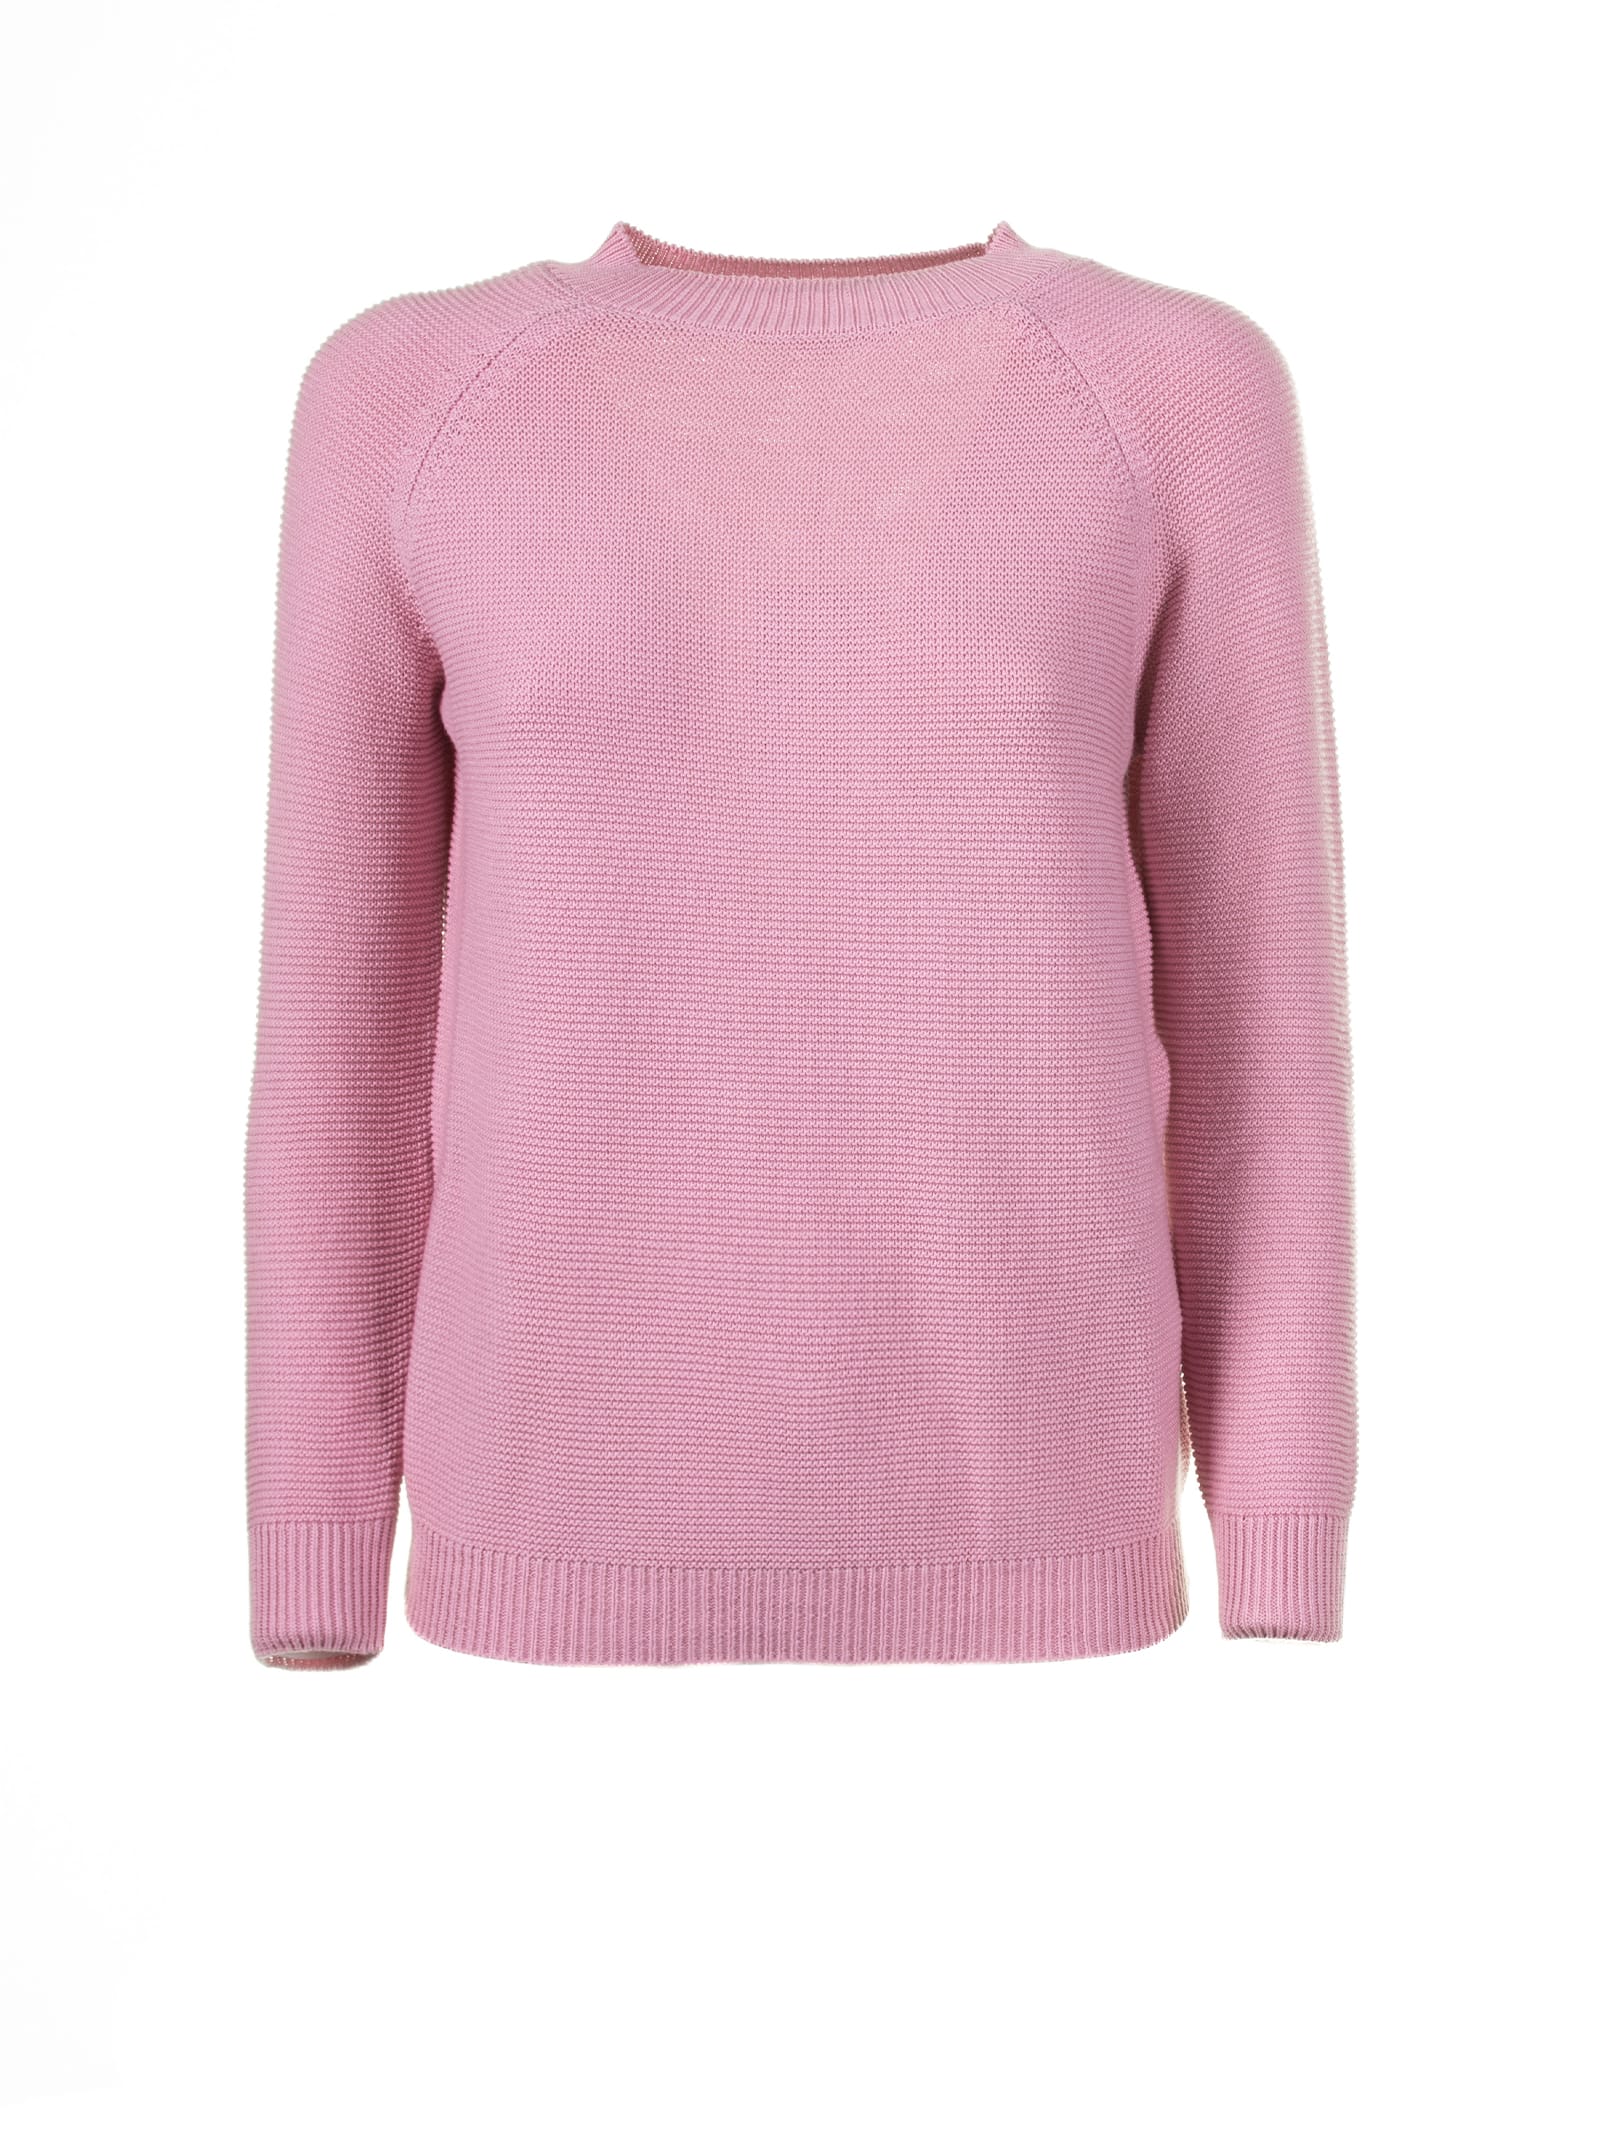 Soft Pink Cotton Sweater